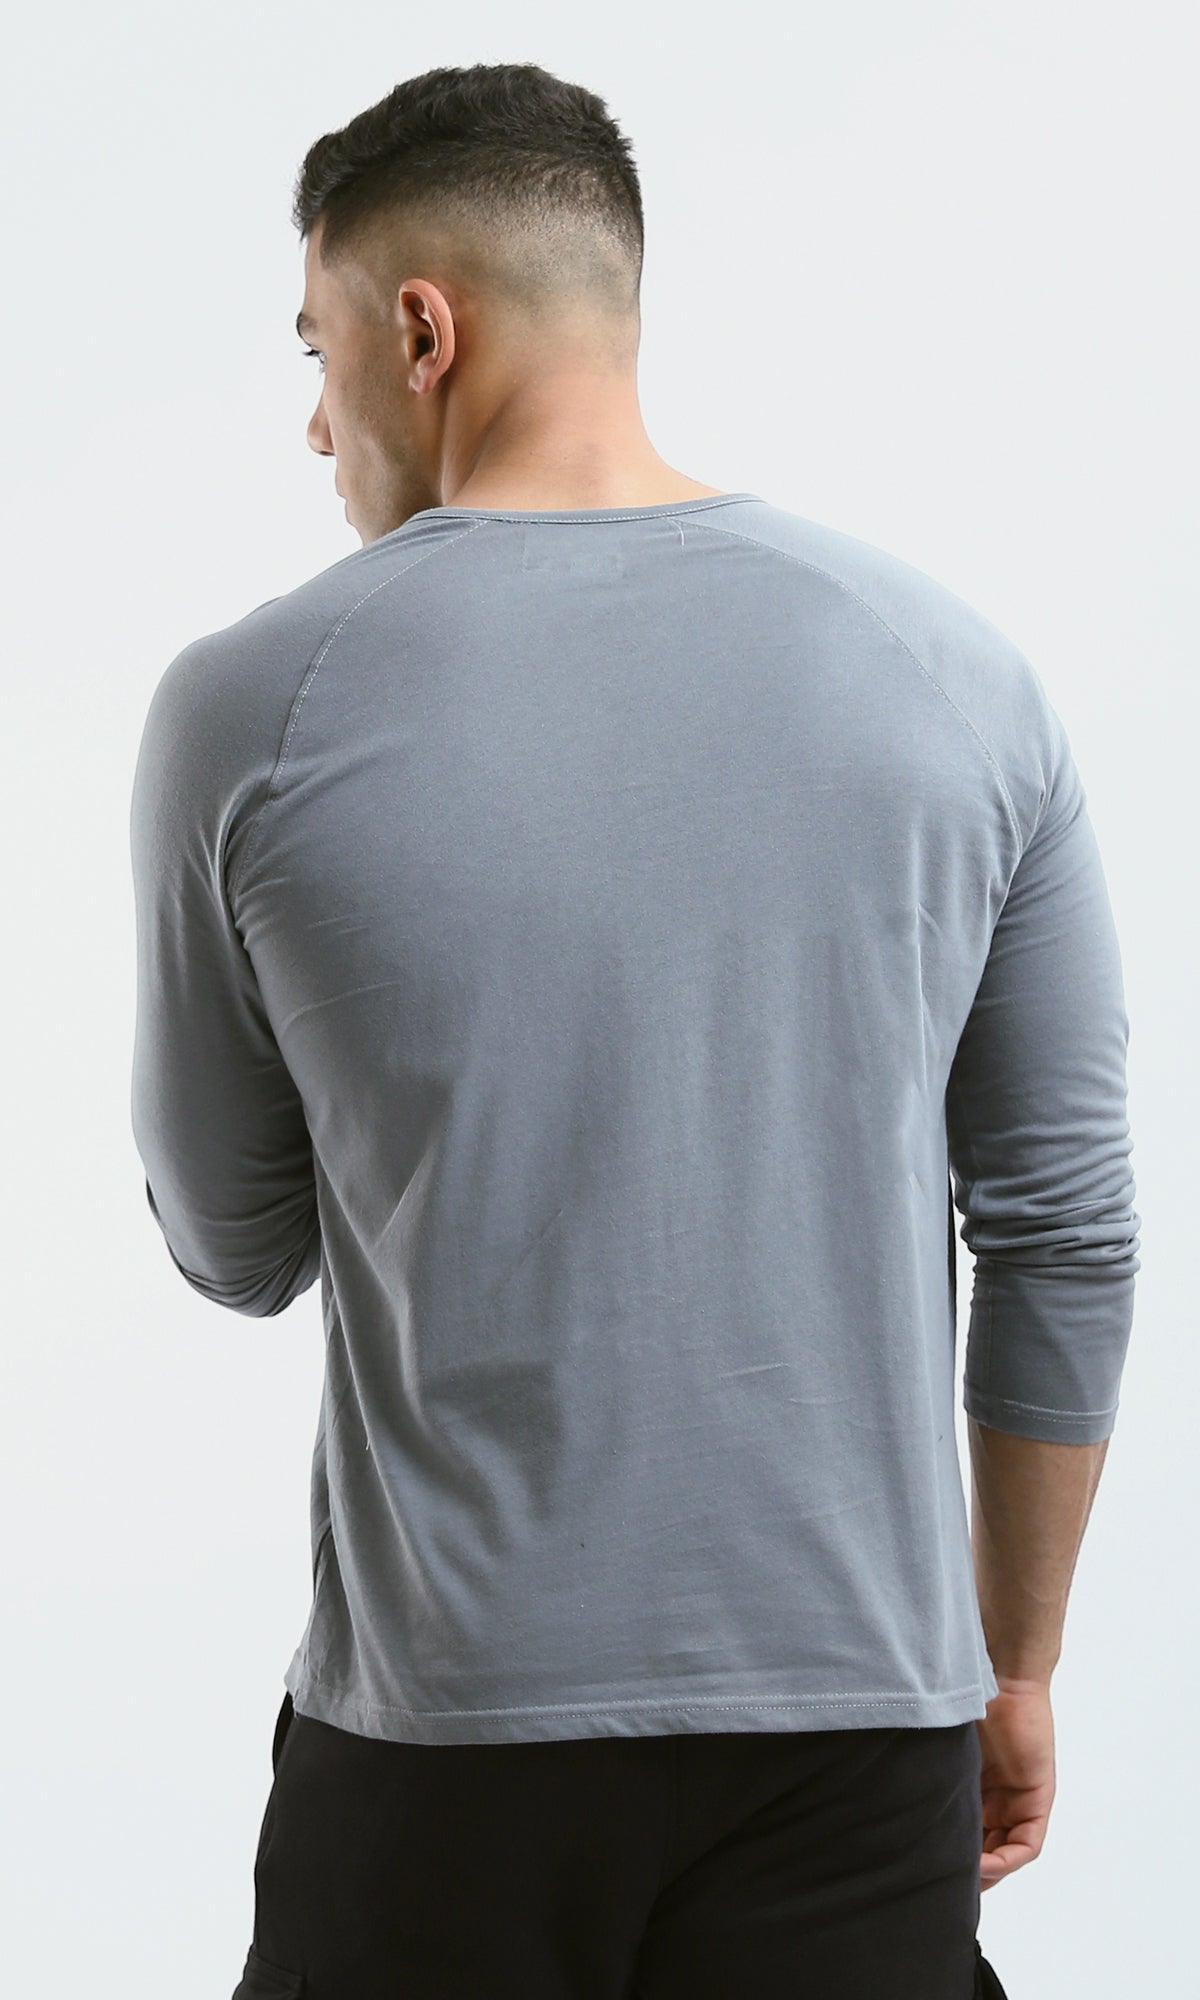 O188539 Long Sleeves Buttoned Medium Grey Henley Shirt